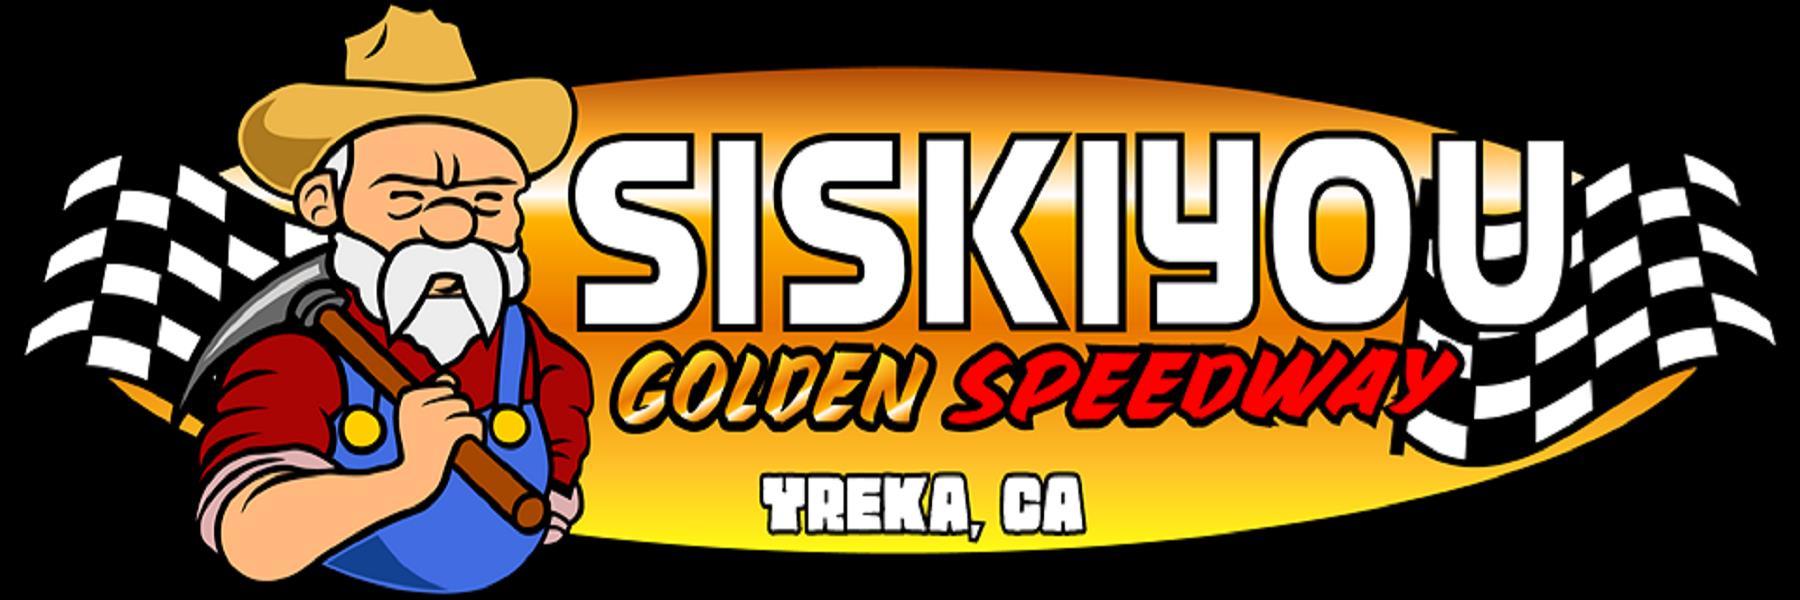 9/25/2021 - Siskiyou Golden Speedway